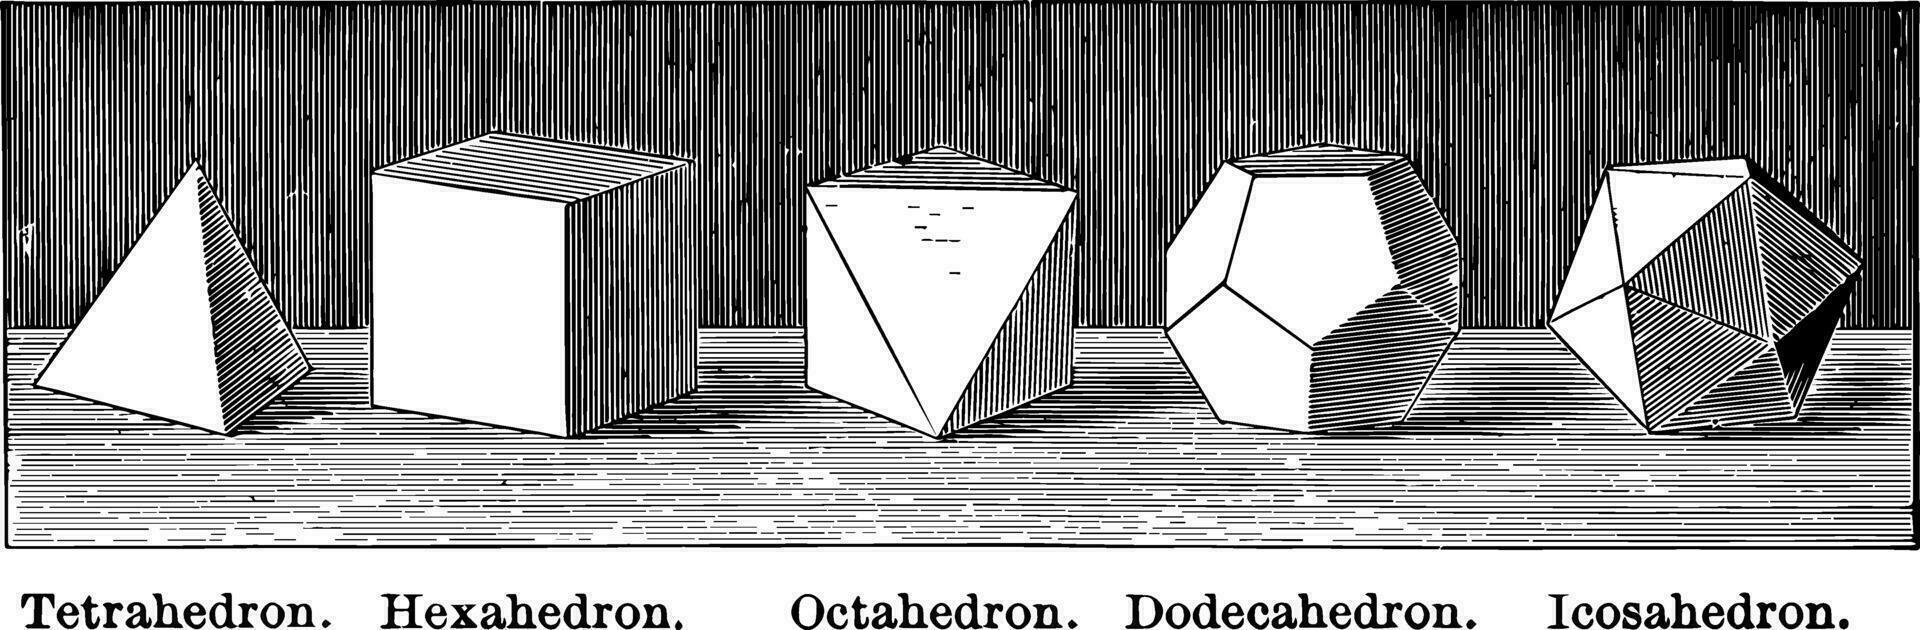 regular poliedros vintage ilustração. vetor